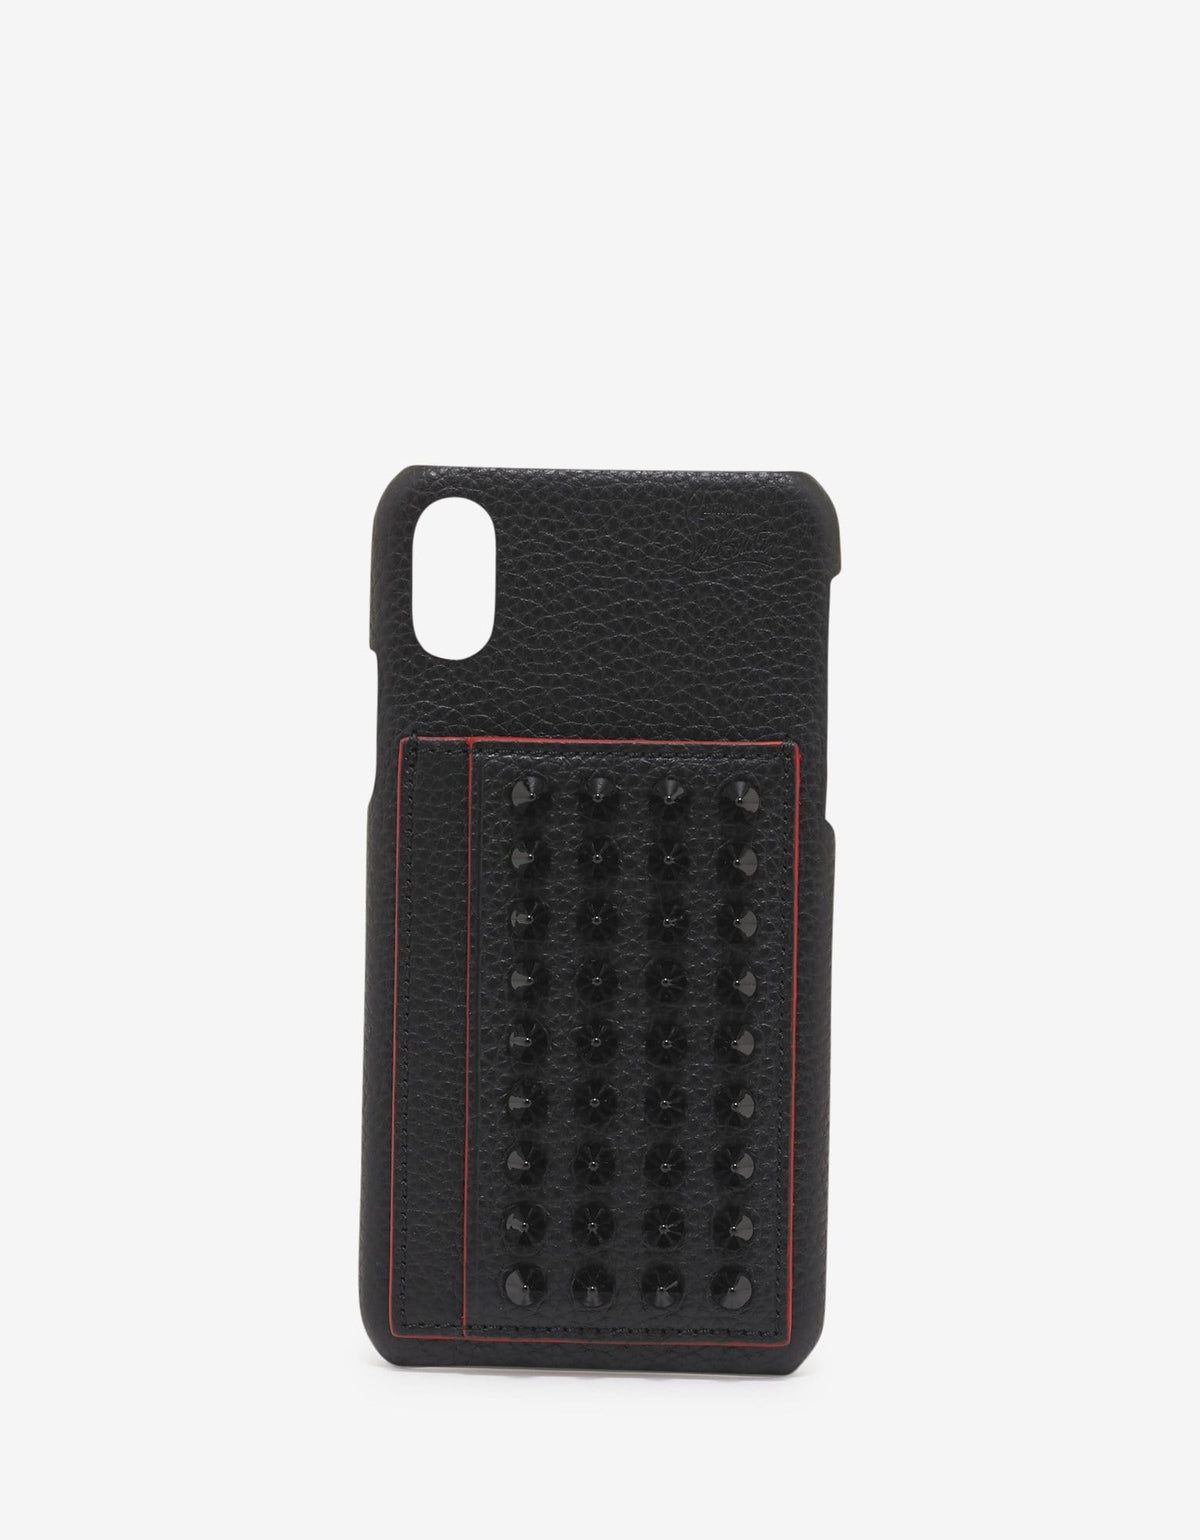 Christian Louboutin Loubiphone Kios iPhone X/XS Case -